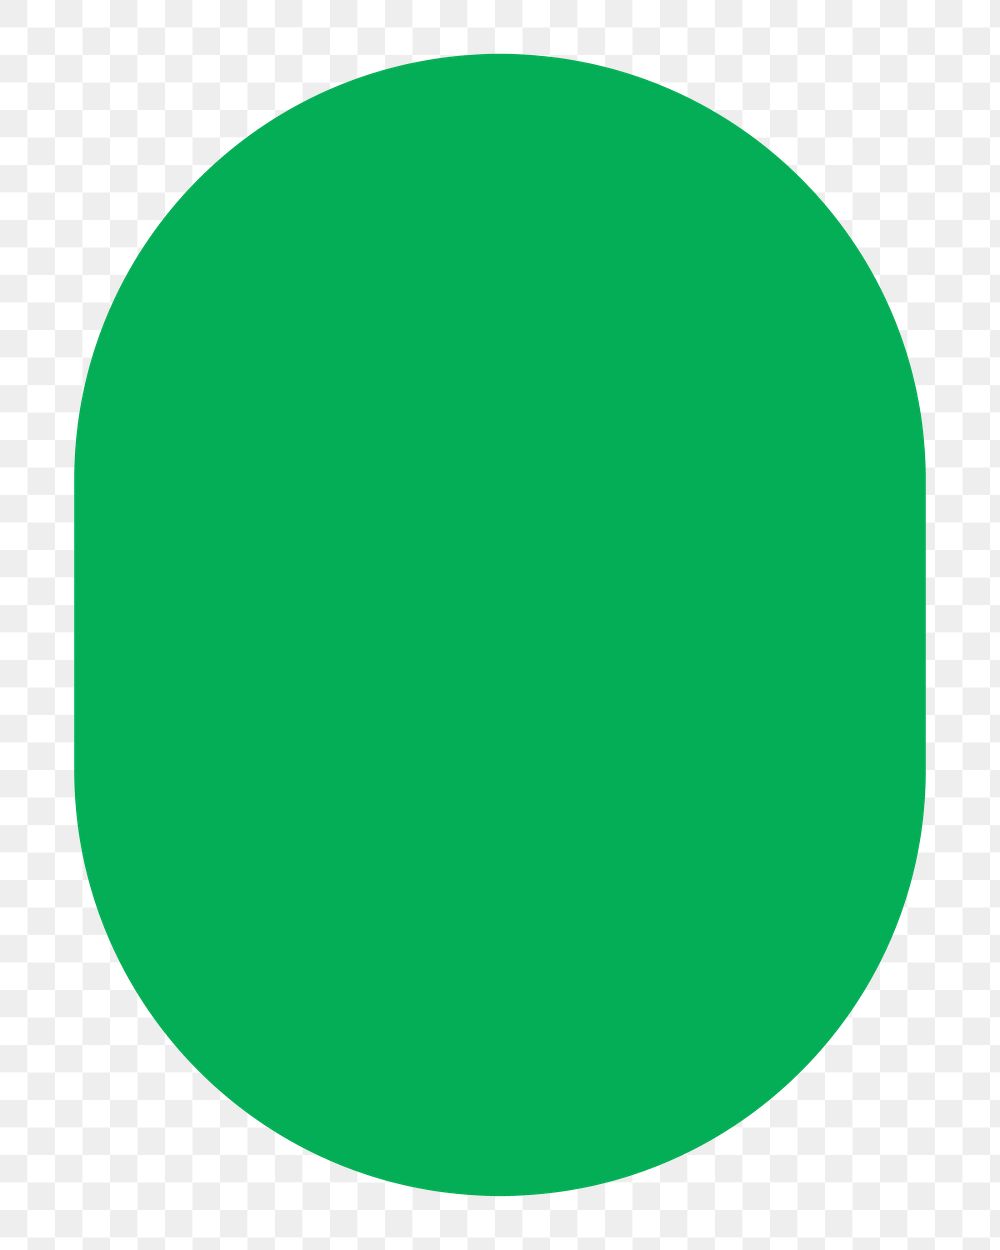 Ellipse png sticker geometric shape, green retro flat clipart